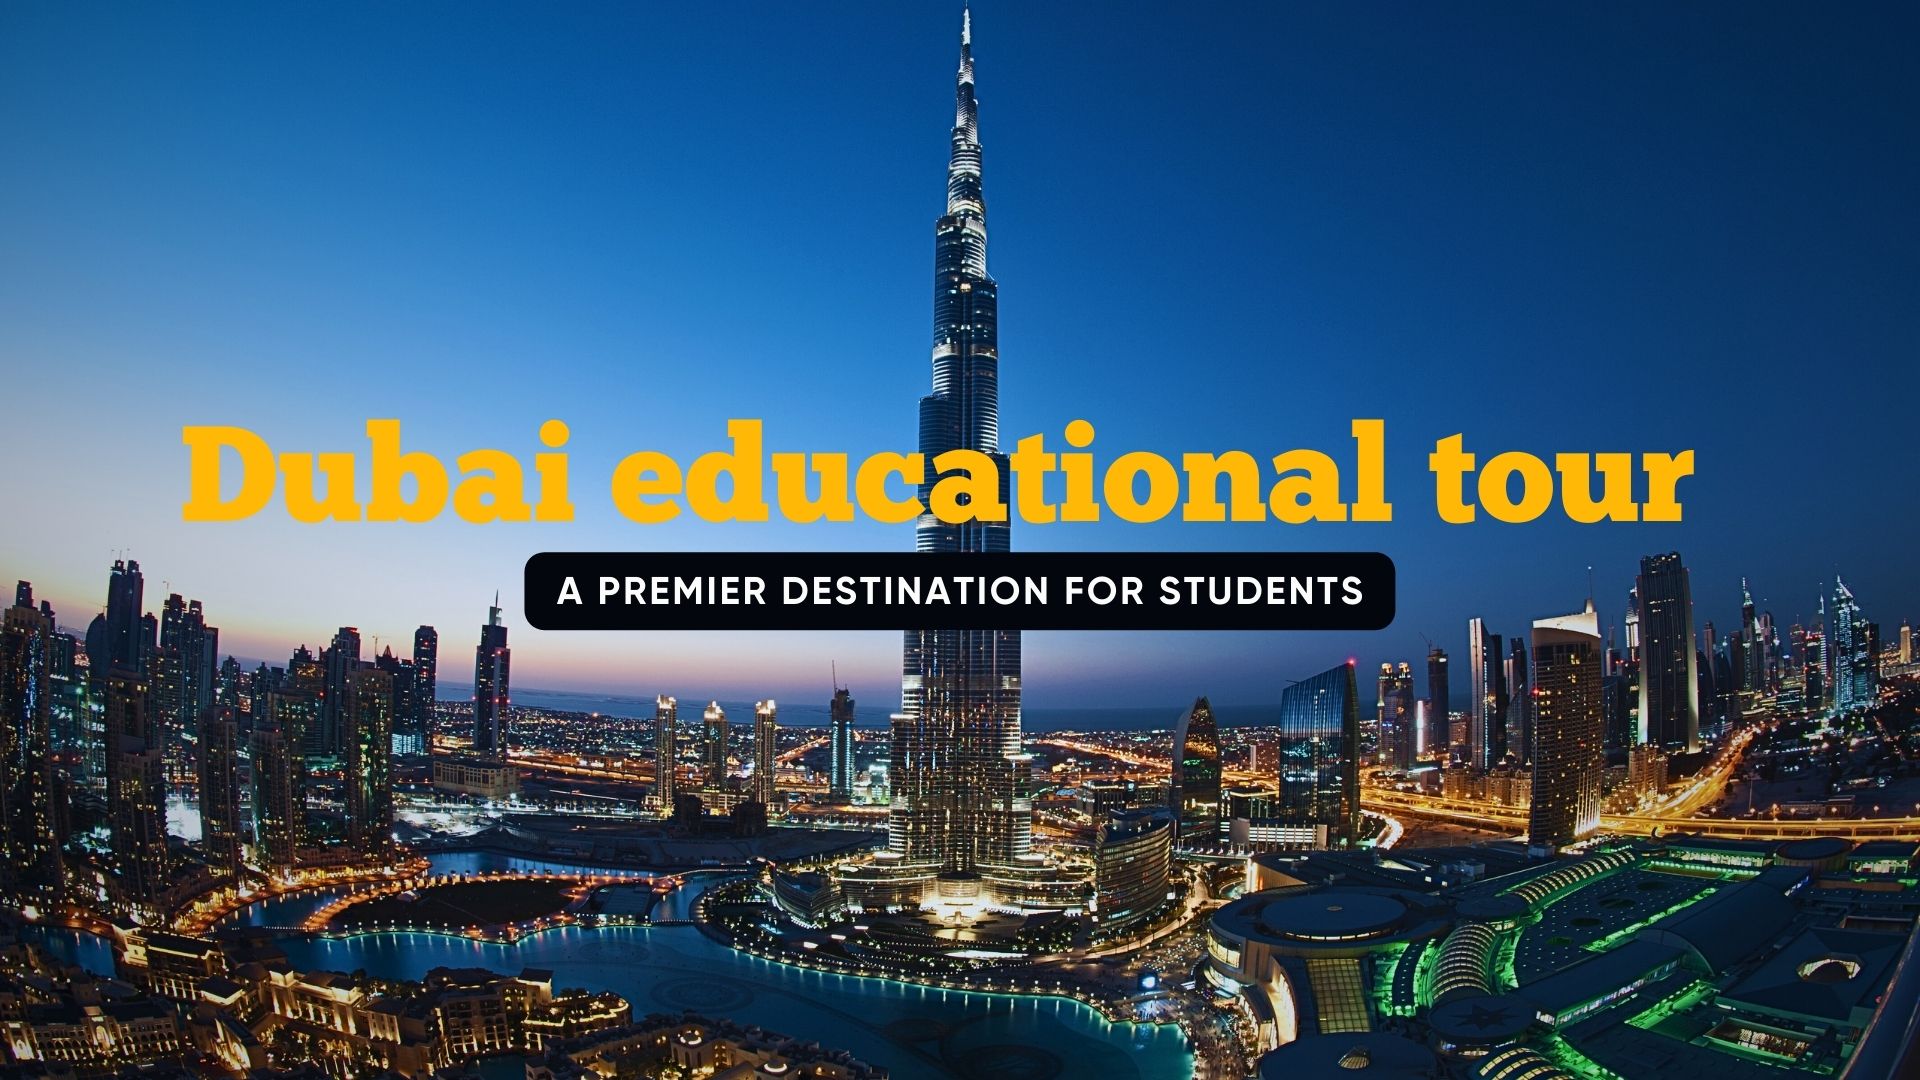 Dubai educational tour